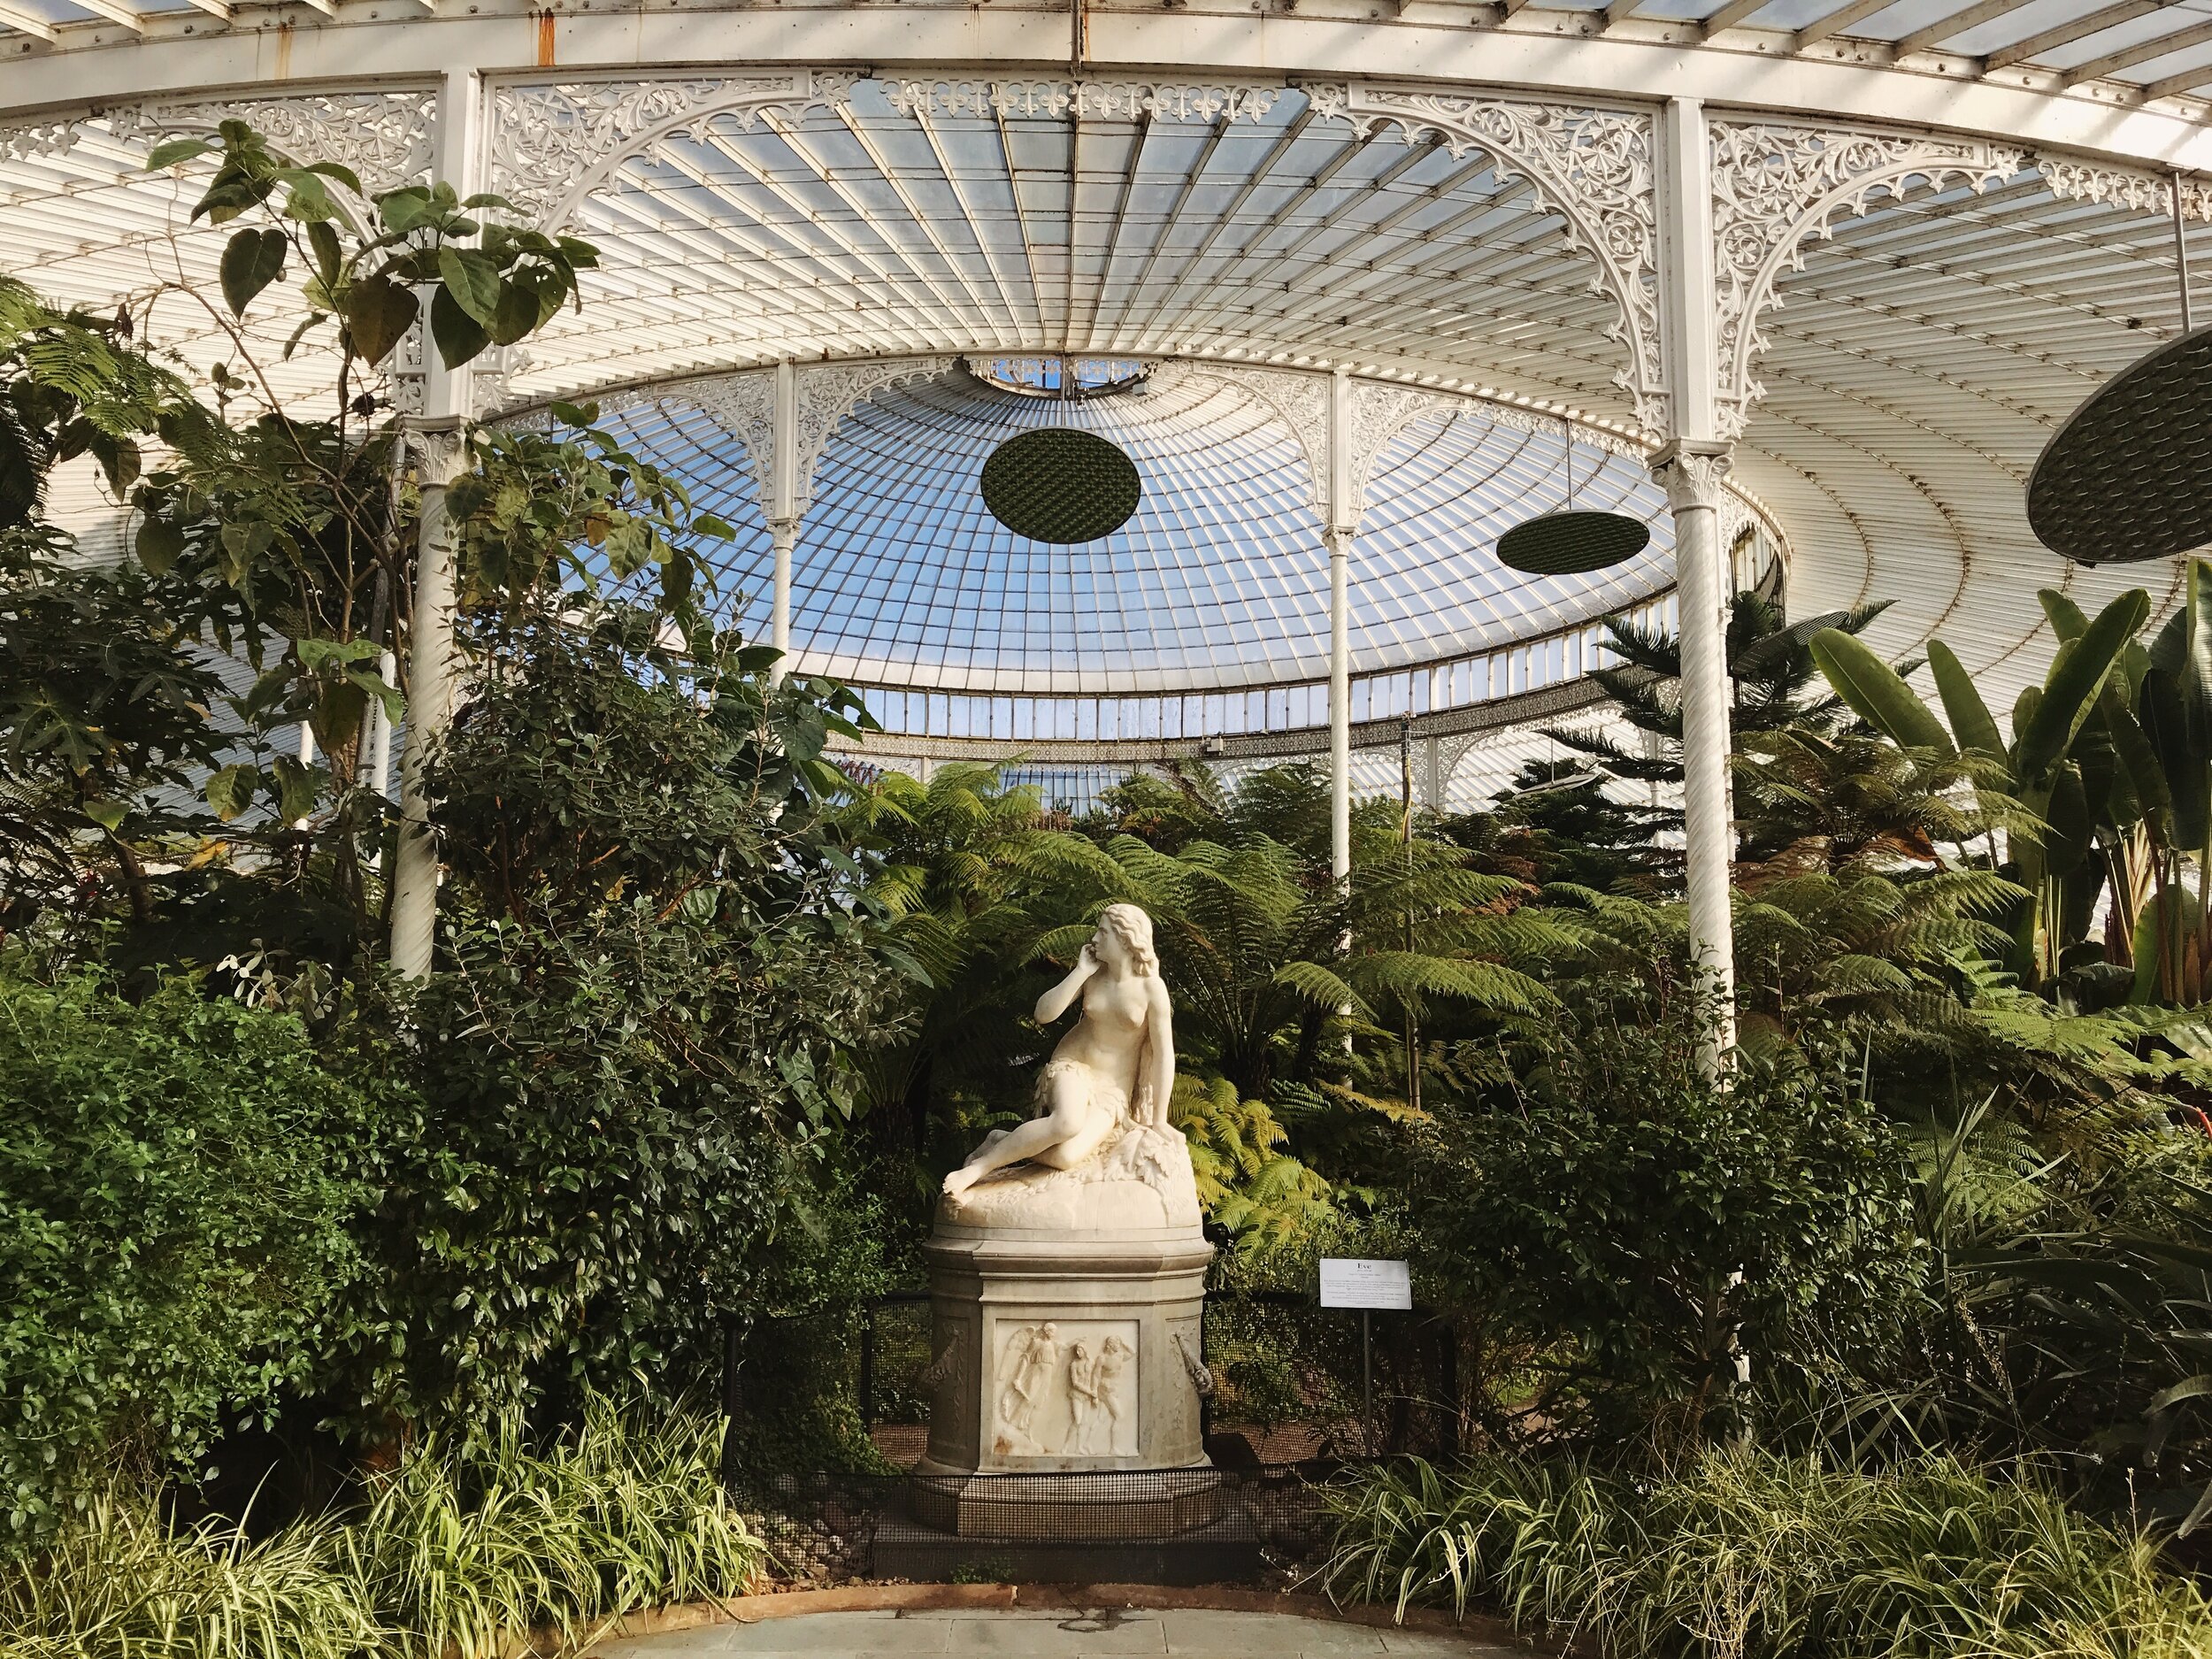 The-Kibble-Palace-at-Glasgow-Botanical-Gardens-3.jpg